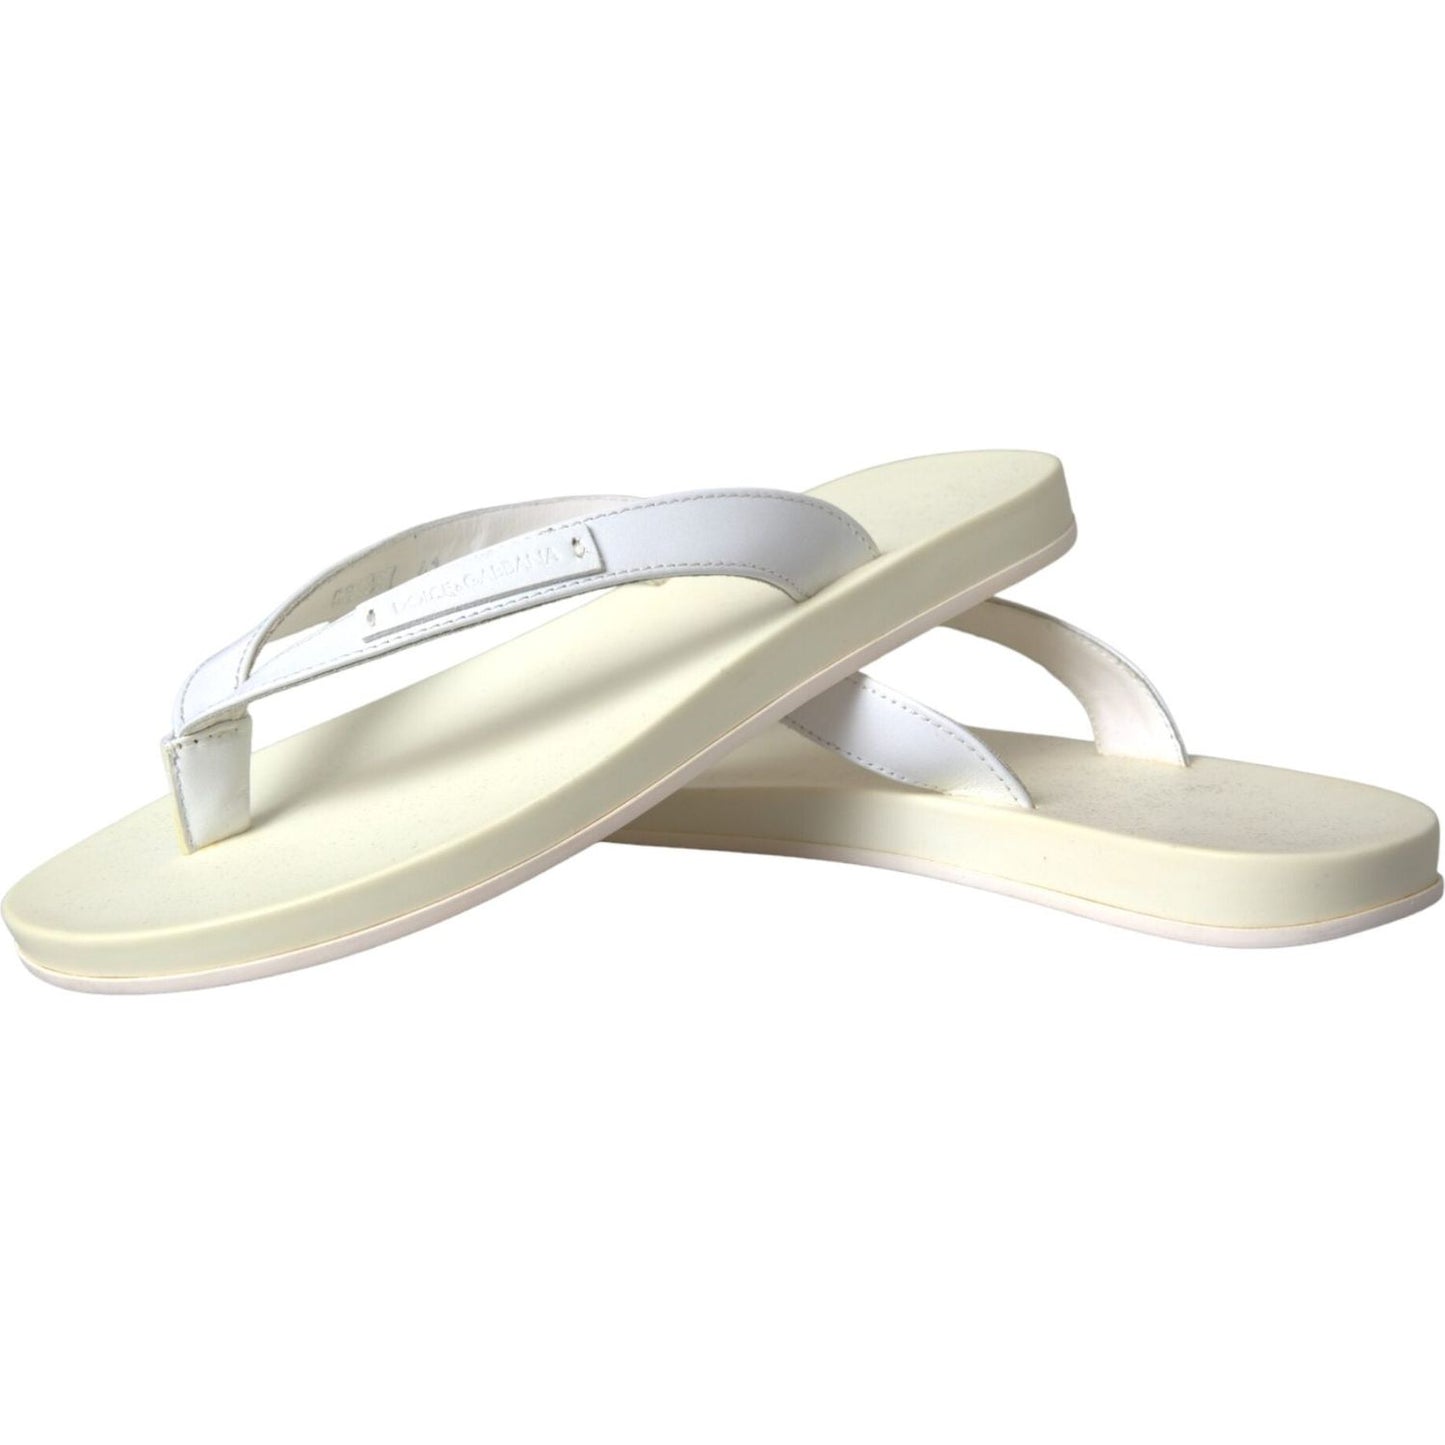 White Leather Slides Sandals Beachwear Shoes Dolce & Gabbana